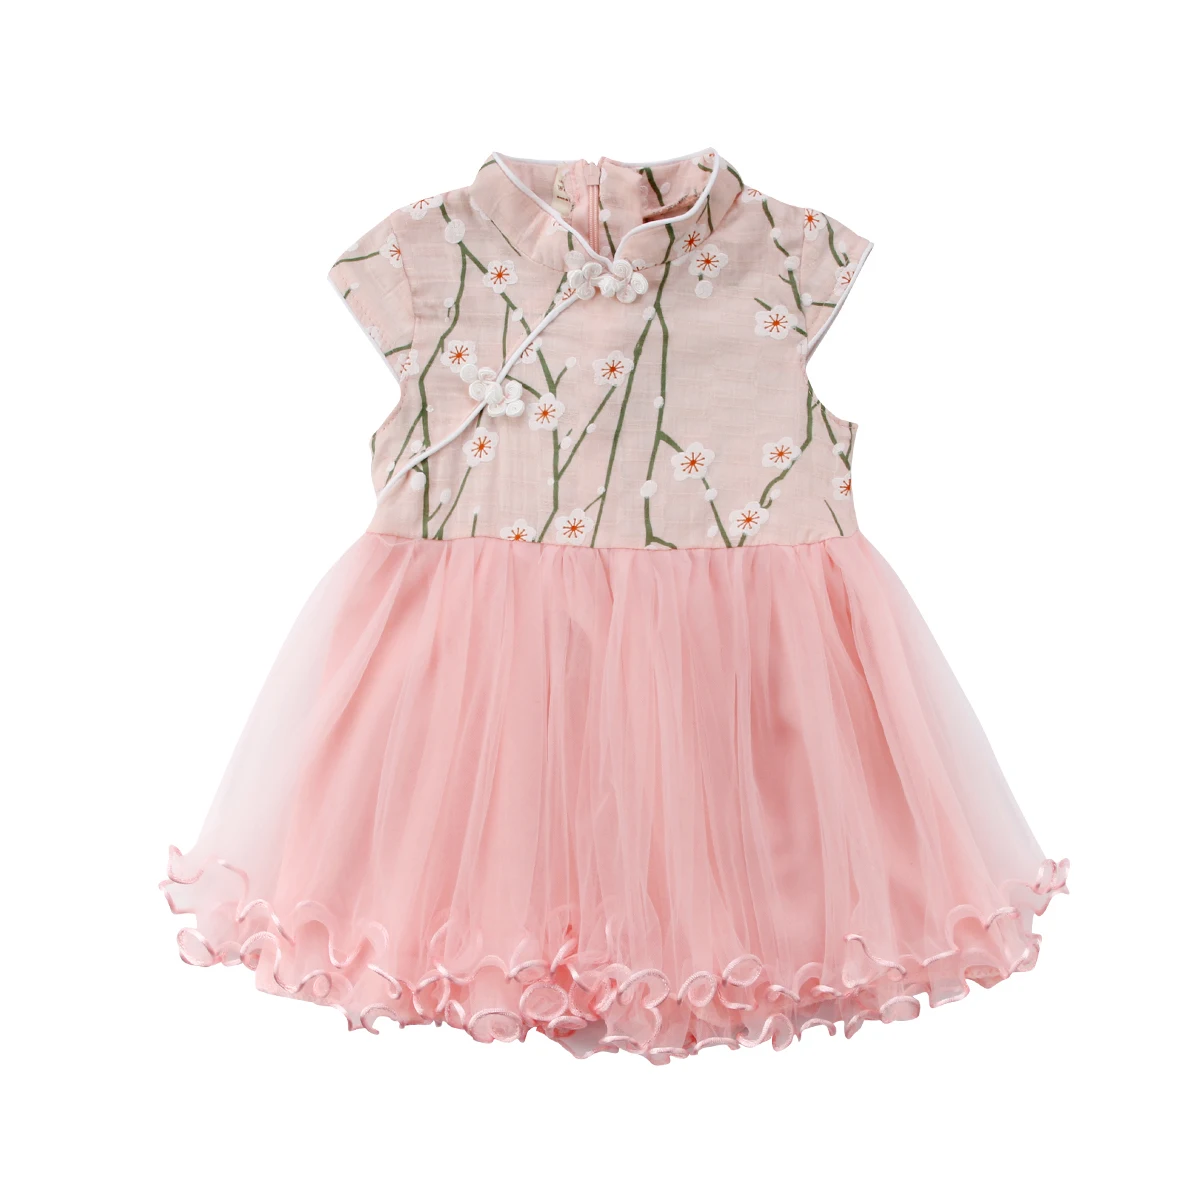 

Folk-custom Mesh Tulle Dress Princess Party Wedding Tutu Net Yarn Ball Gown Dress Baby Girls Floral Sundress Outfits Pink 6M-4Y